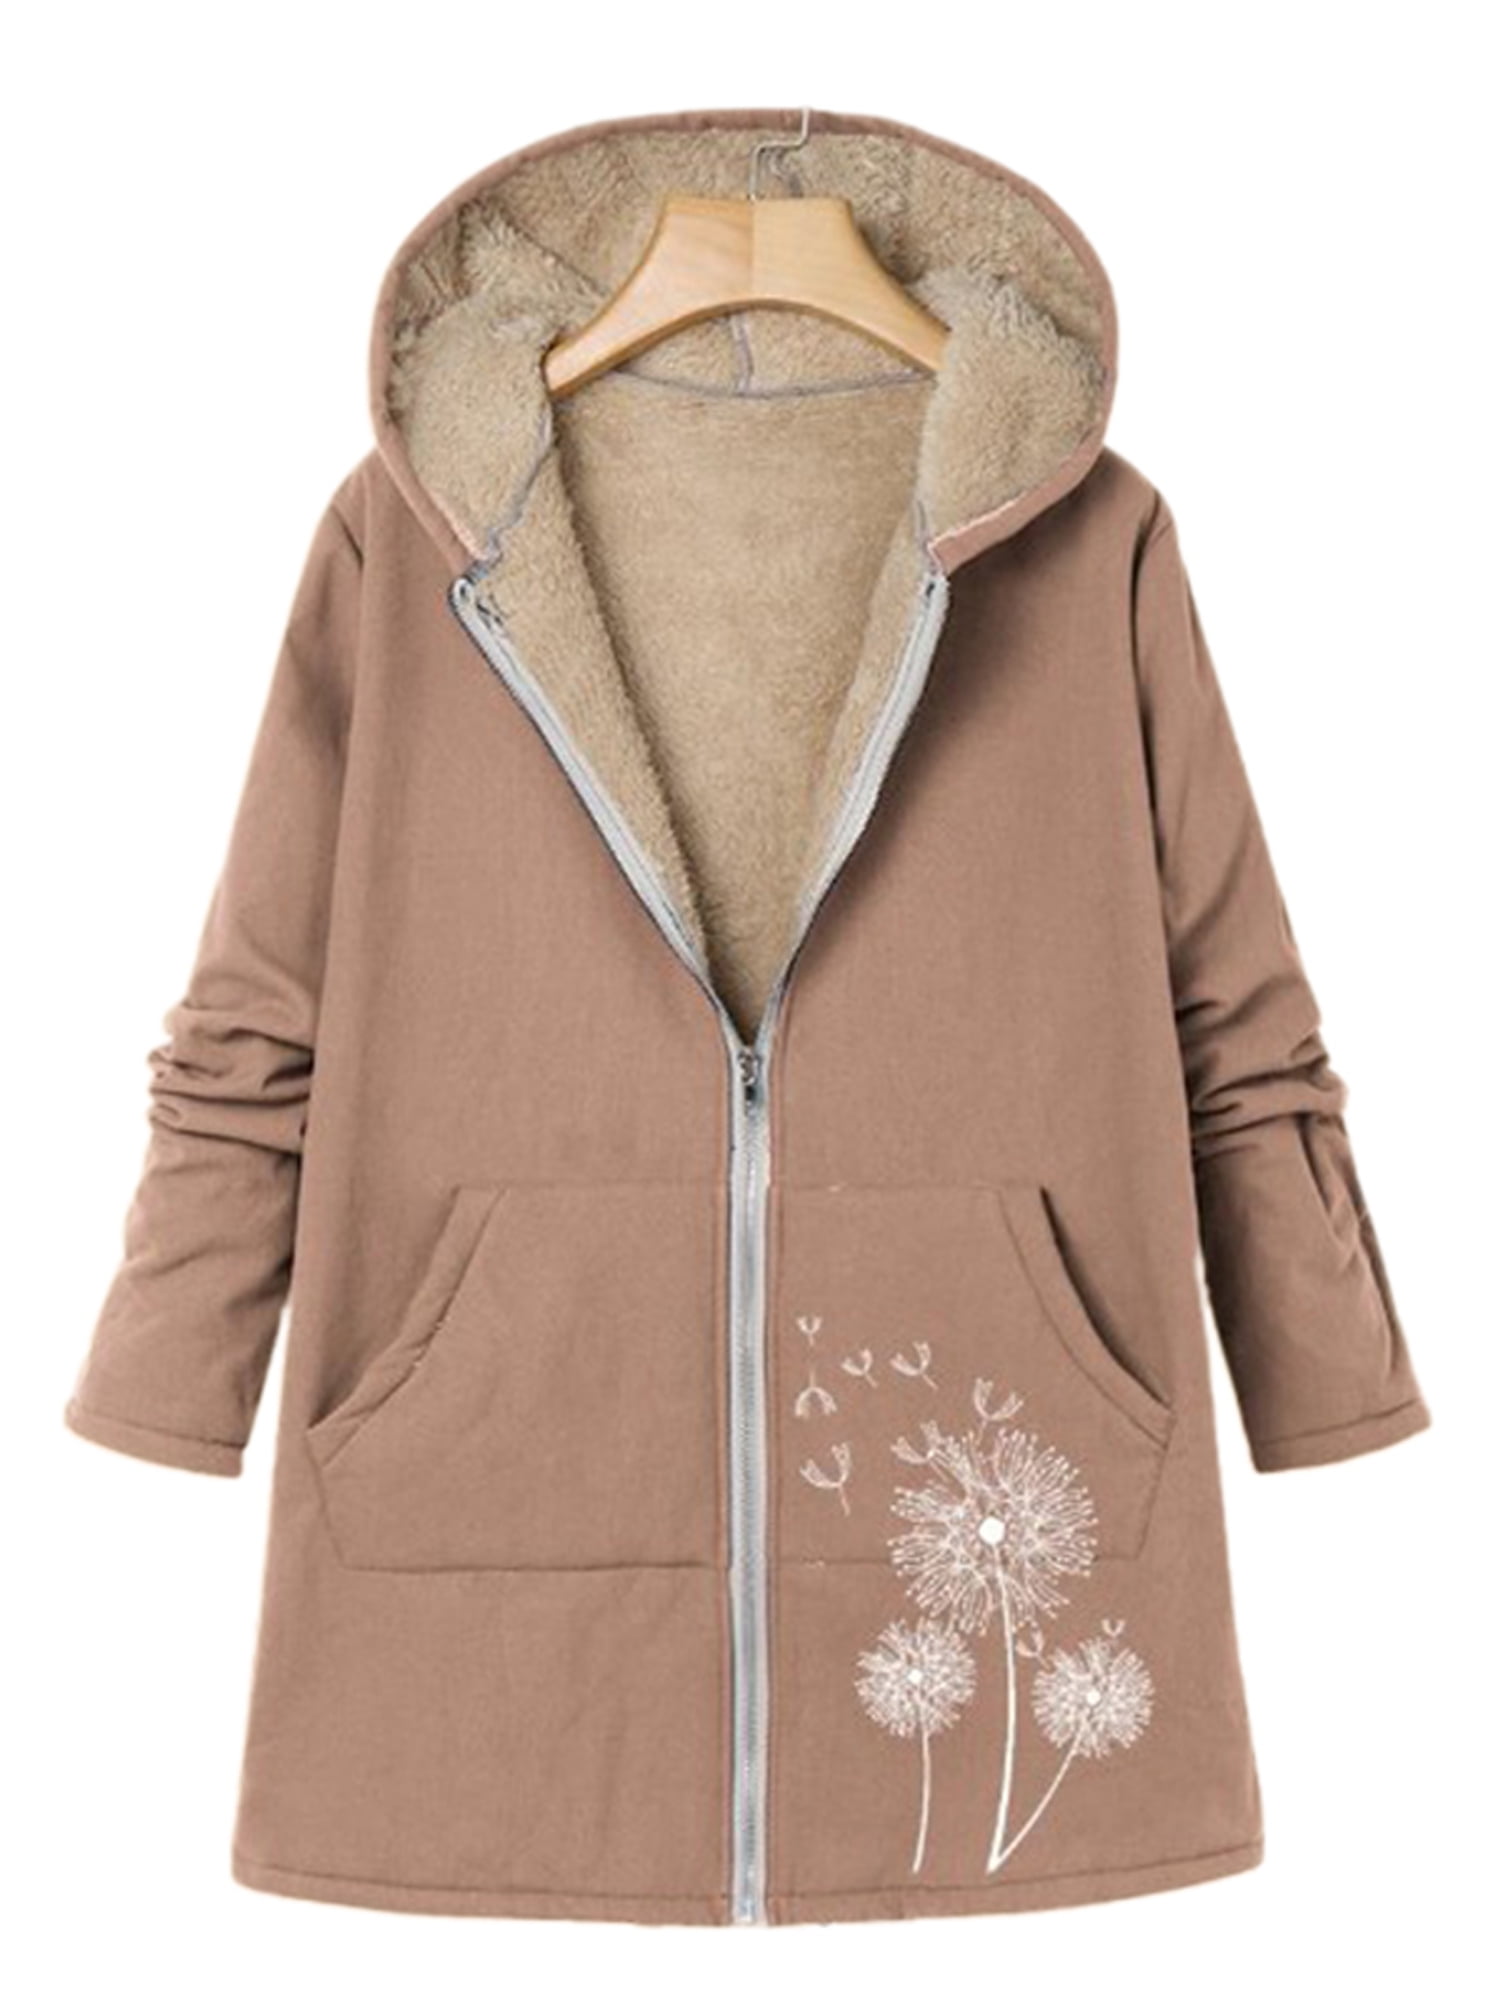 Hooded Jackets for Women Casual Cotton Linen Warm Vest Jackets Tops Vintage Floral Print Plus Velvet Hoodies Outwear